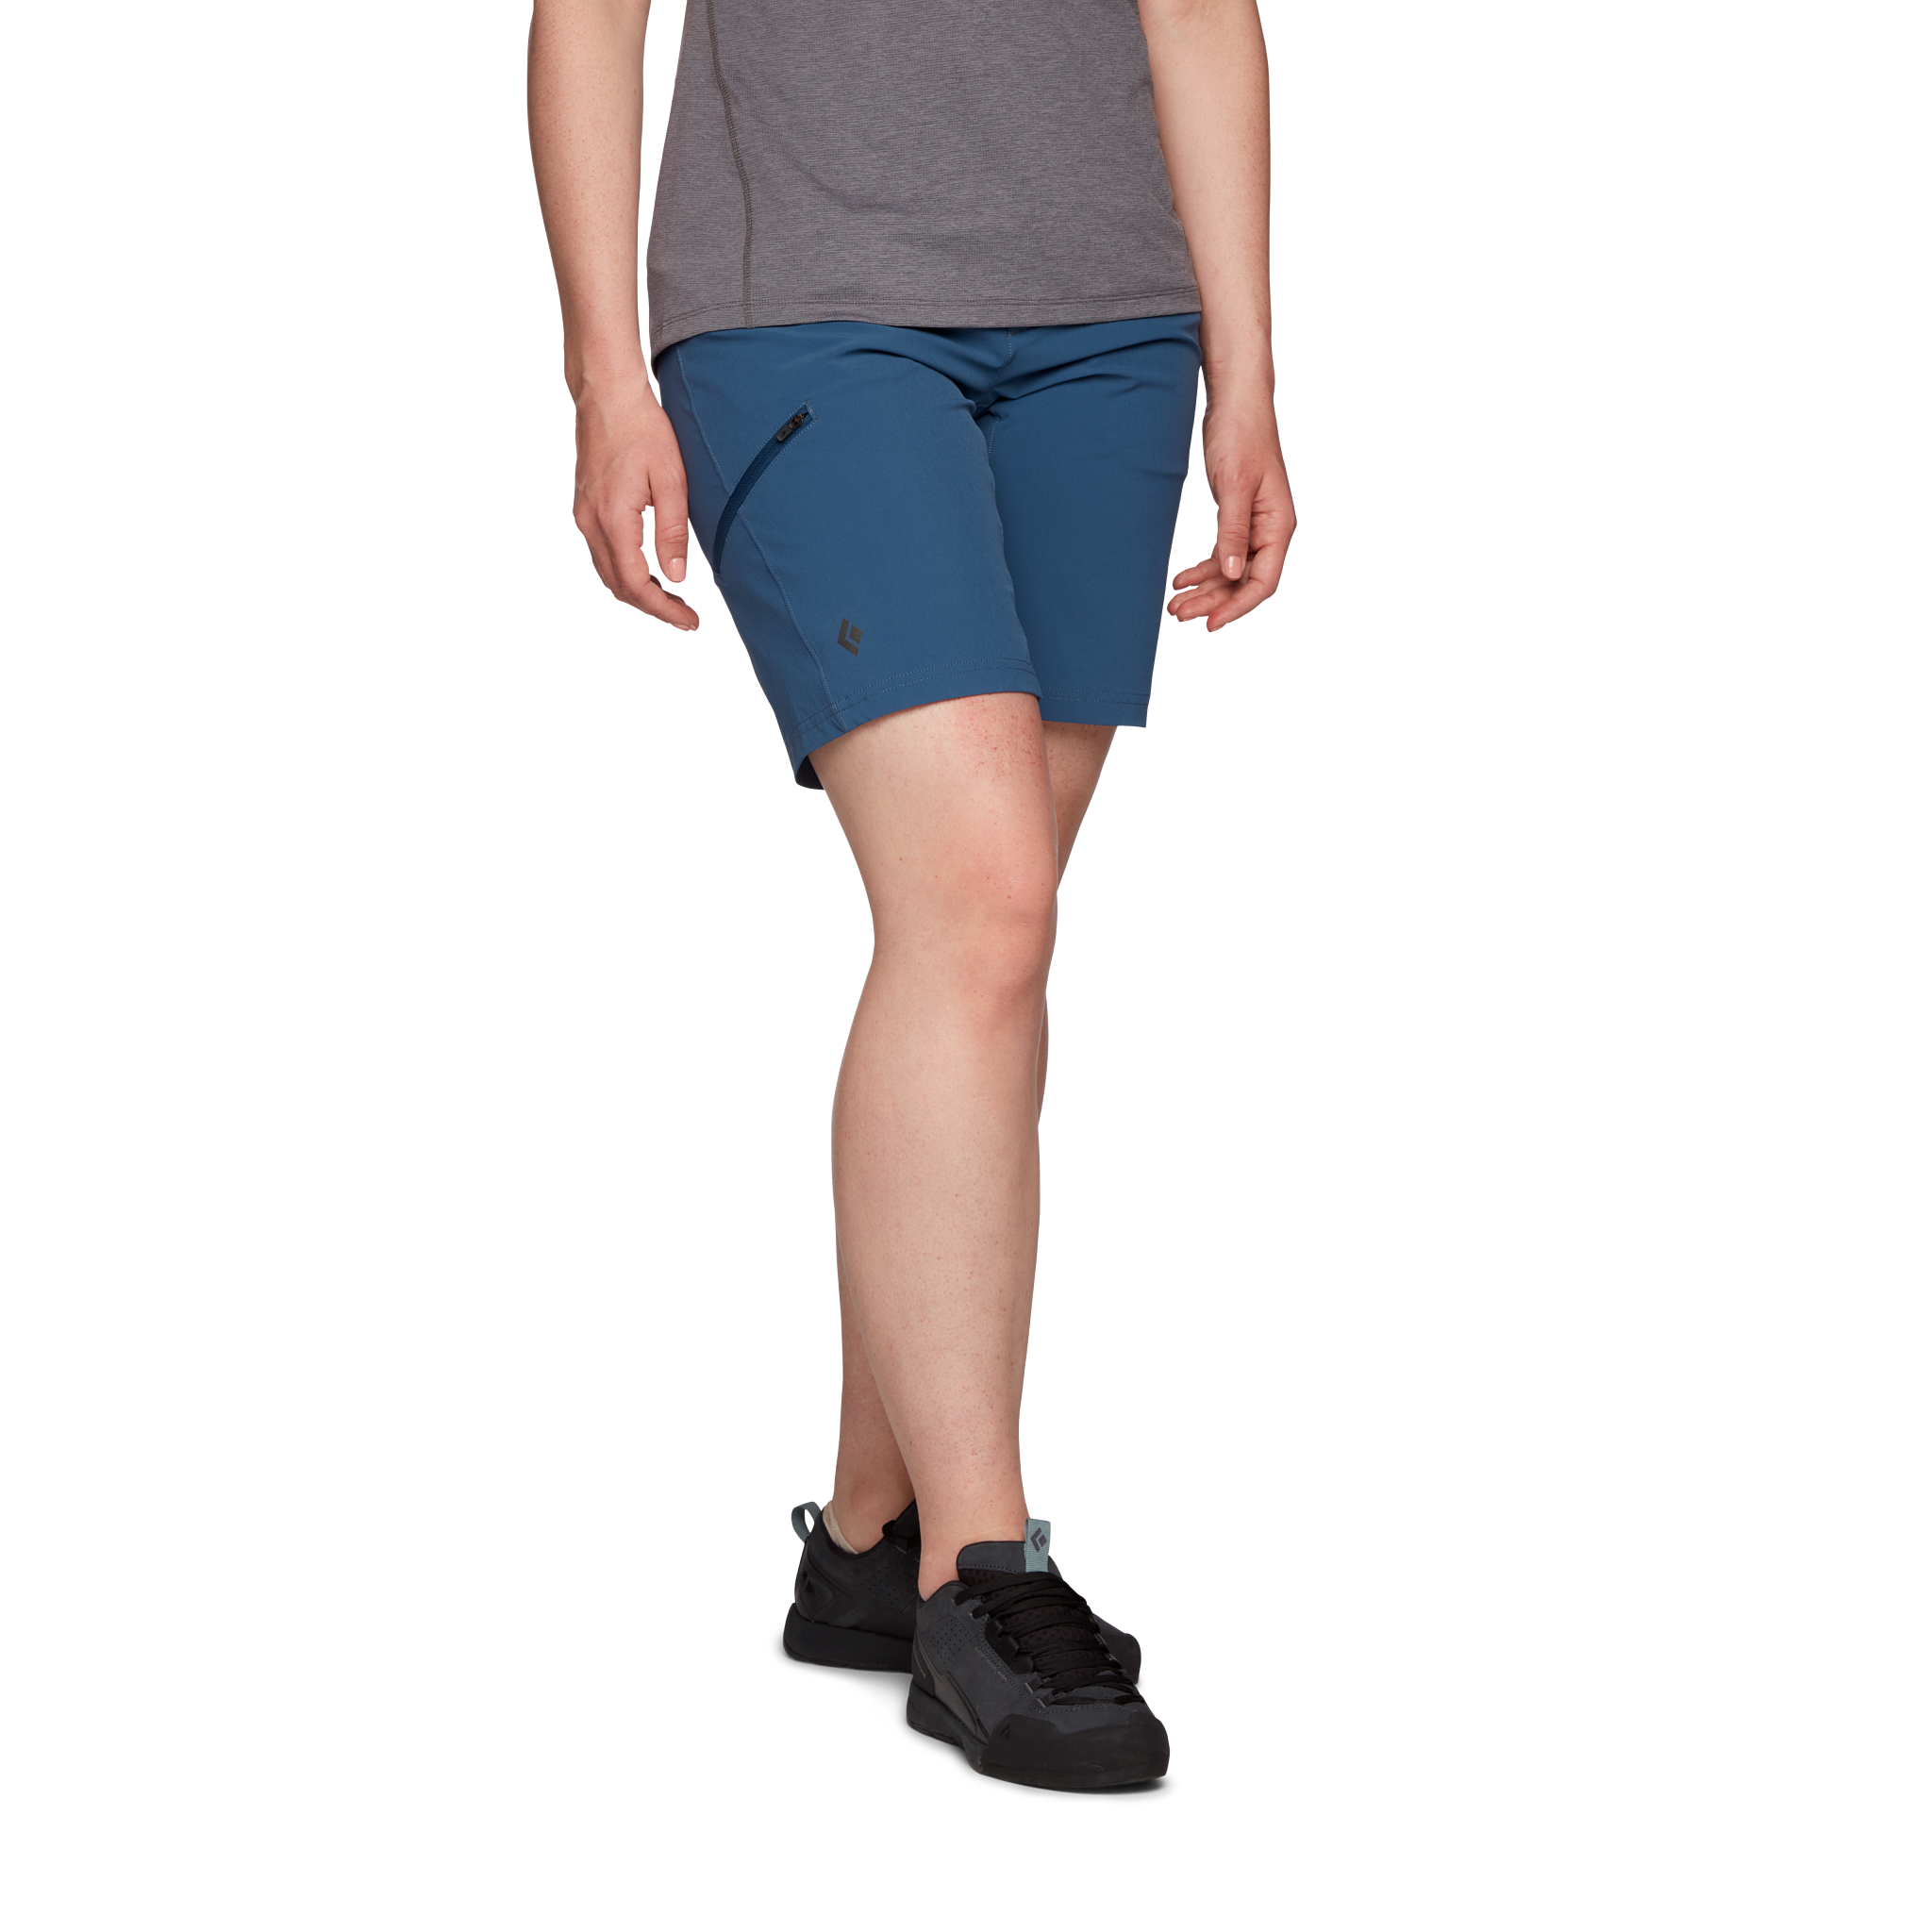 Black Diamond Equipment Women's Valley Shorts Size 6, in Ink Blue